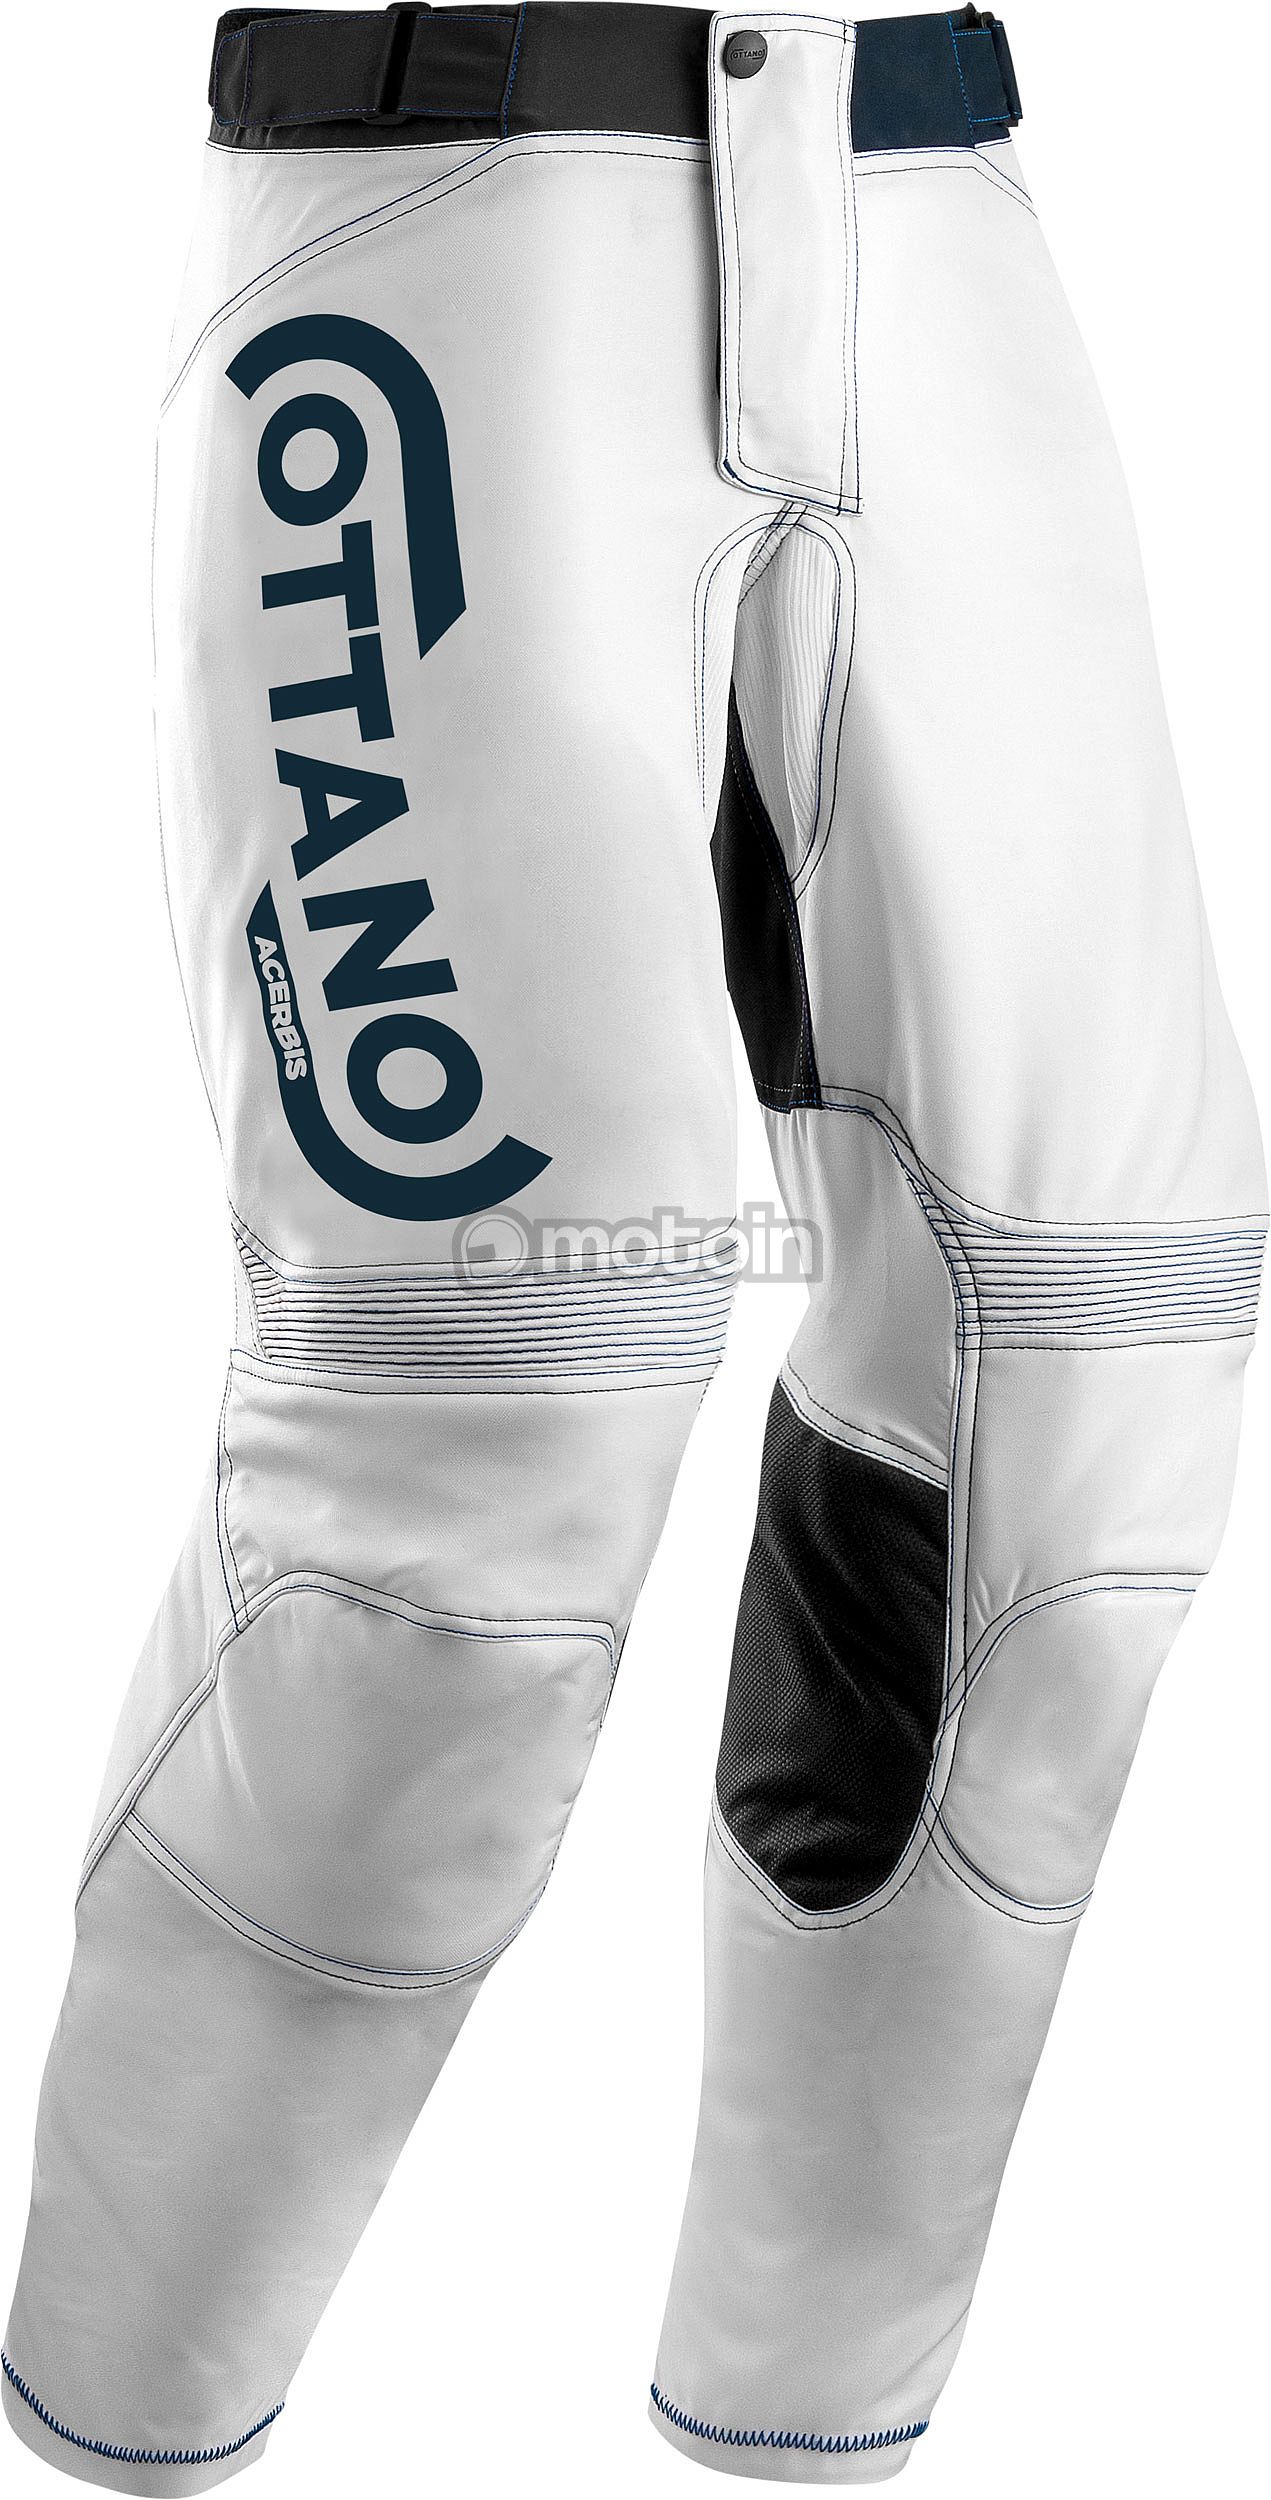 Acerbis Ottano 2.0 Racing, pantalones textil